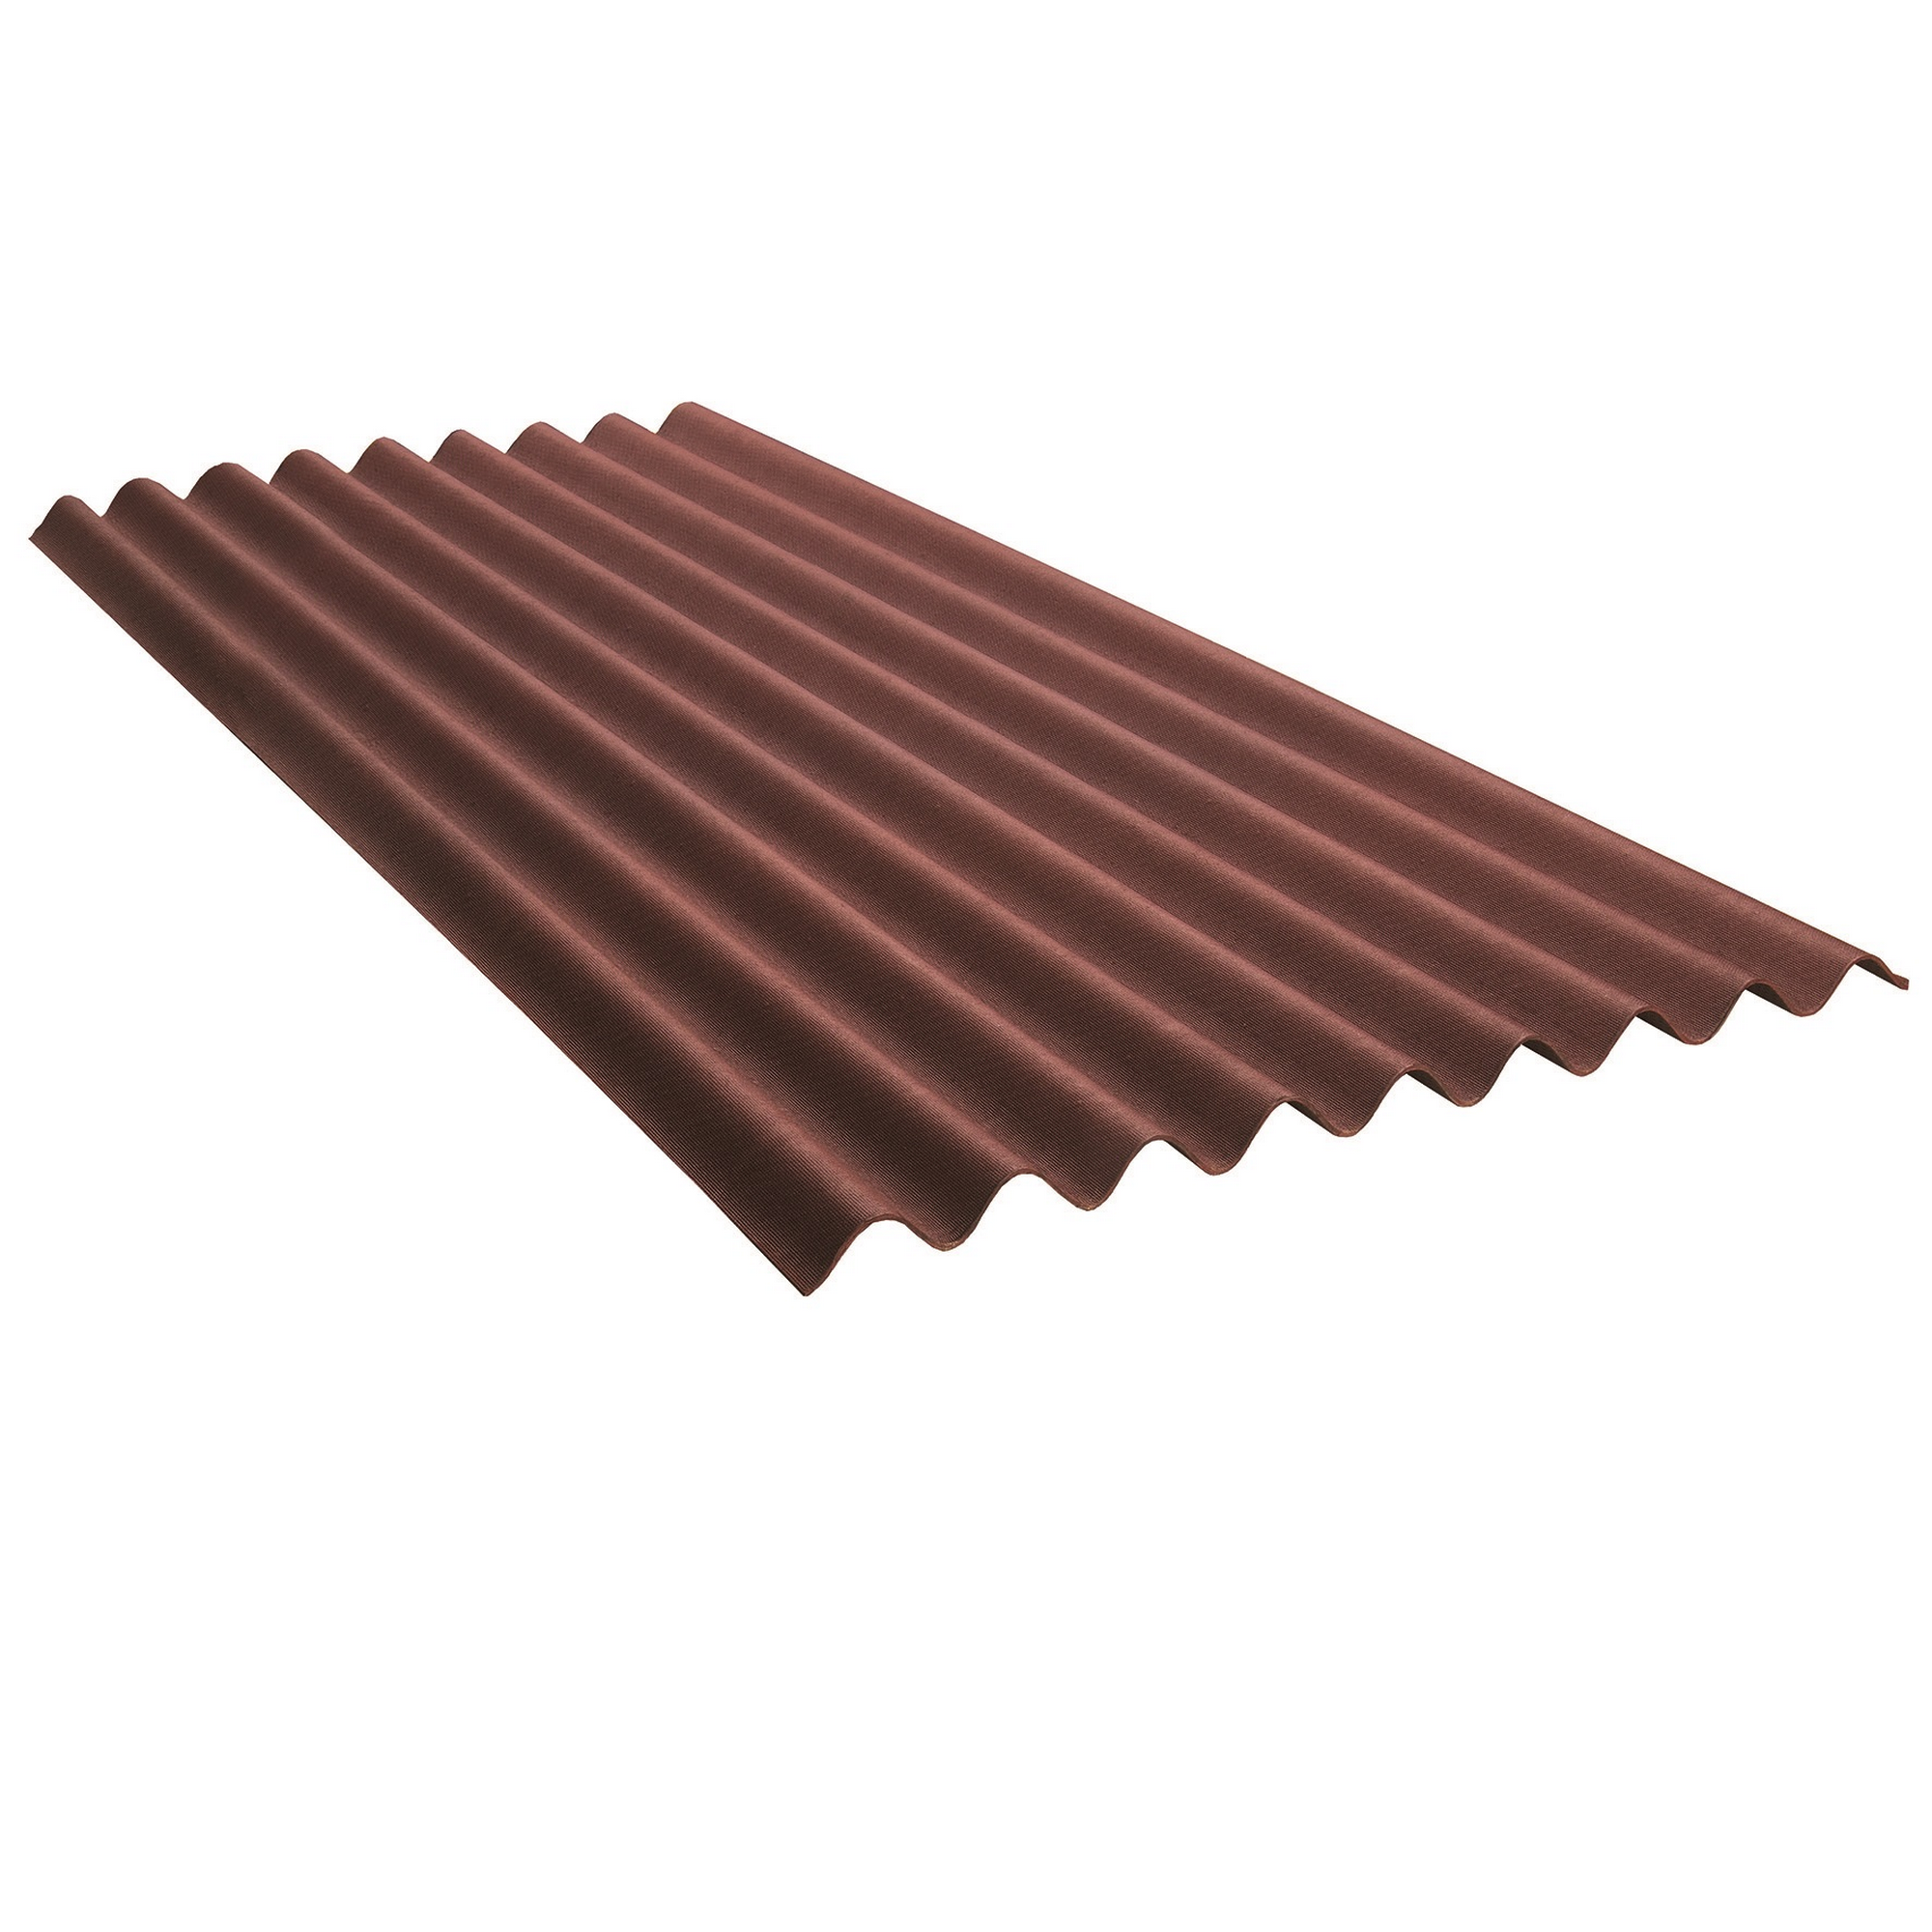 Dach- und Wandplatte 'Base' rot 200 x 85,5 x 0,26 cm + product picture